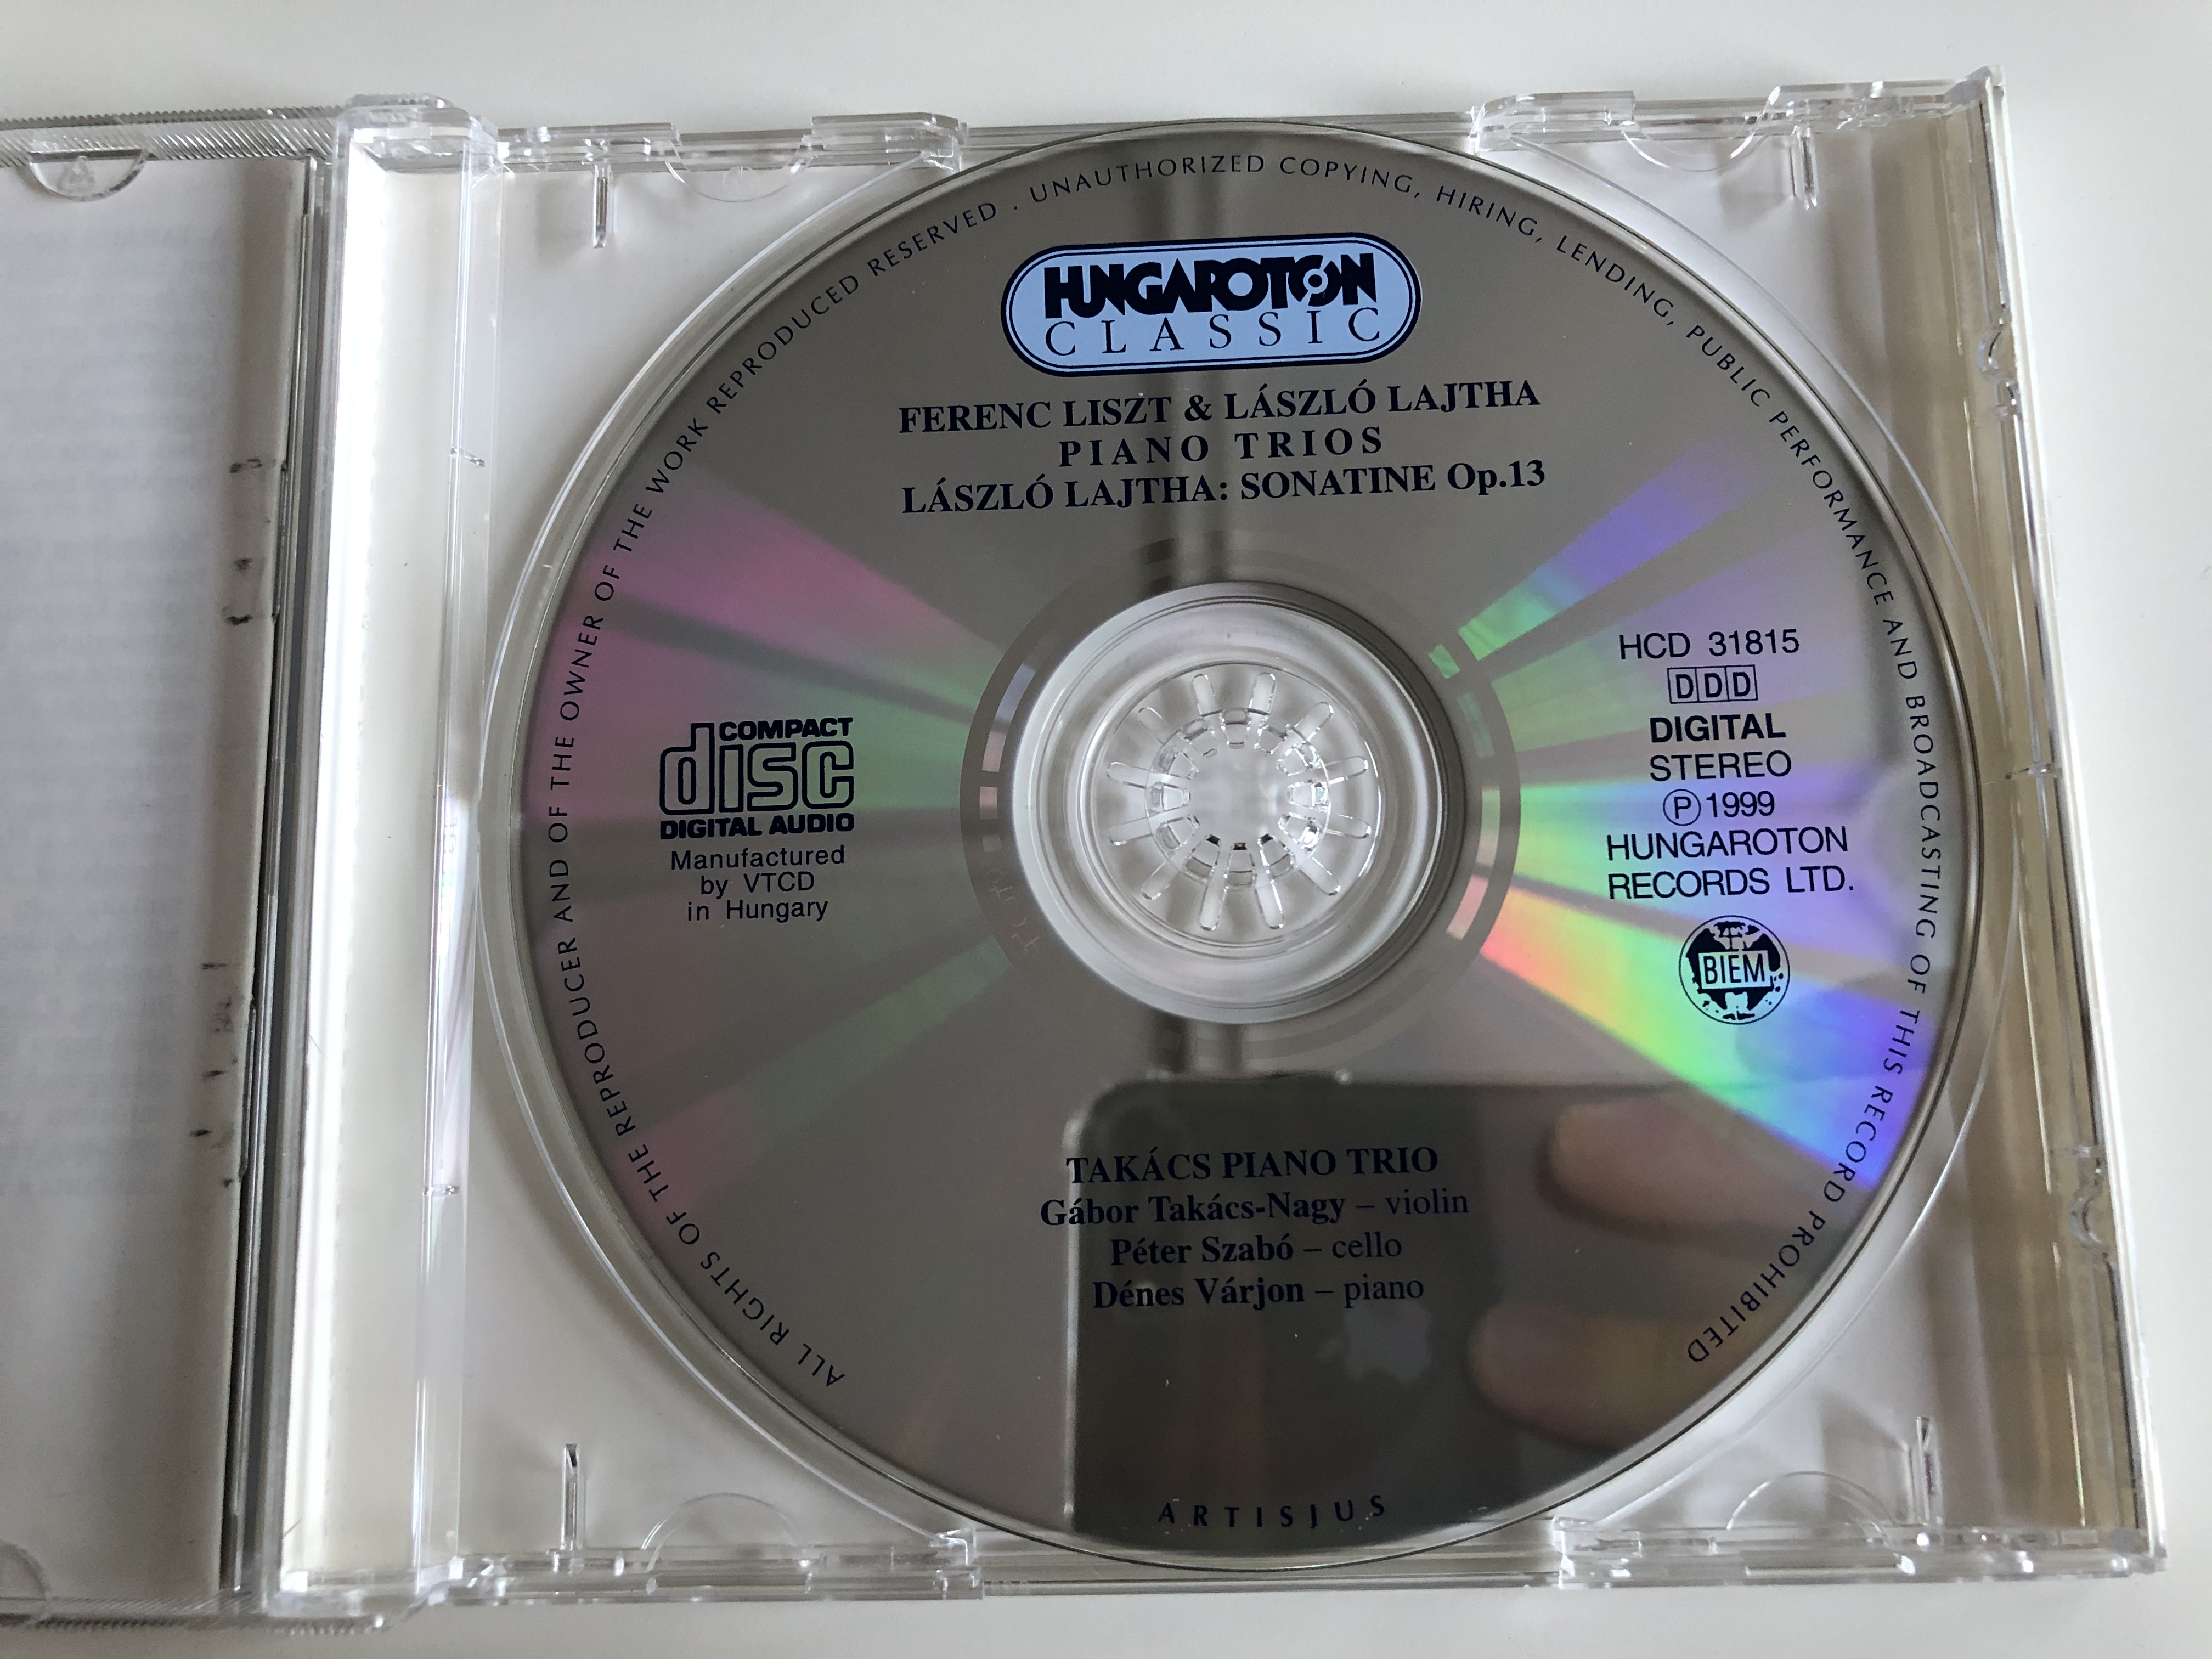 liszt-lajtha-piano-trios-lajtha-sonatine-op.-13-takacs-piano-trio-hungaroton-classic-audio-cd-1999-stereo-hcd-31815-6-.jpg